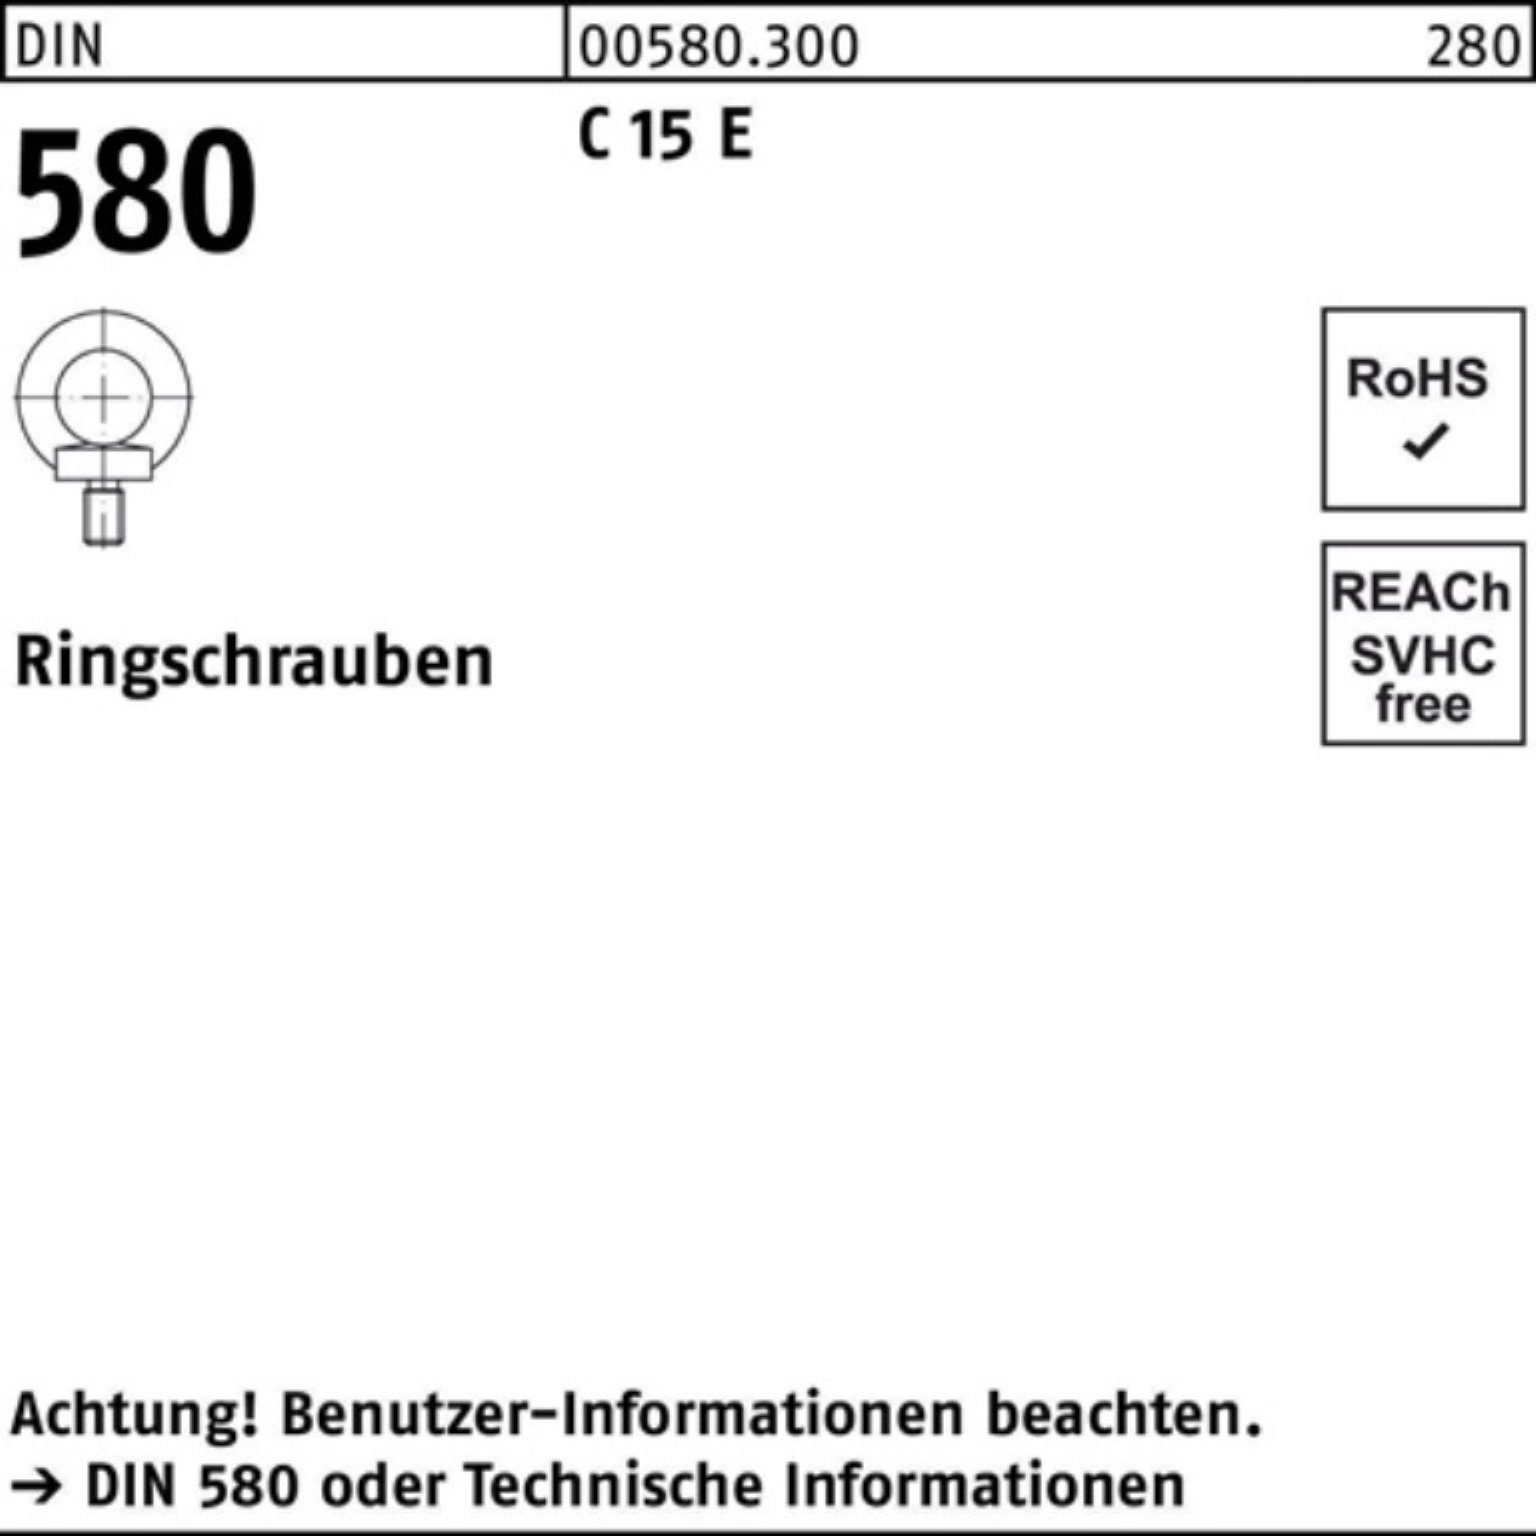 Reyher Schraube 100er Pack Ringschraube DIN 580 M56 C 15 E 1 Stück DIN 580 C 15 E Rin